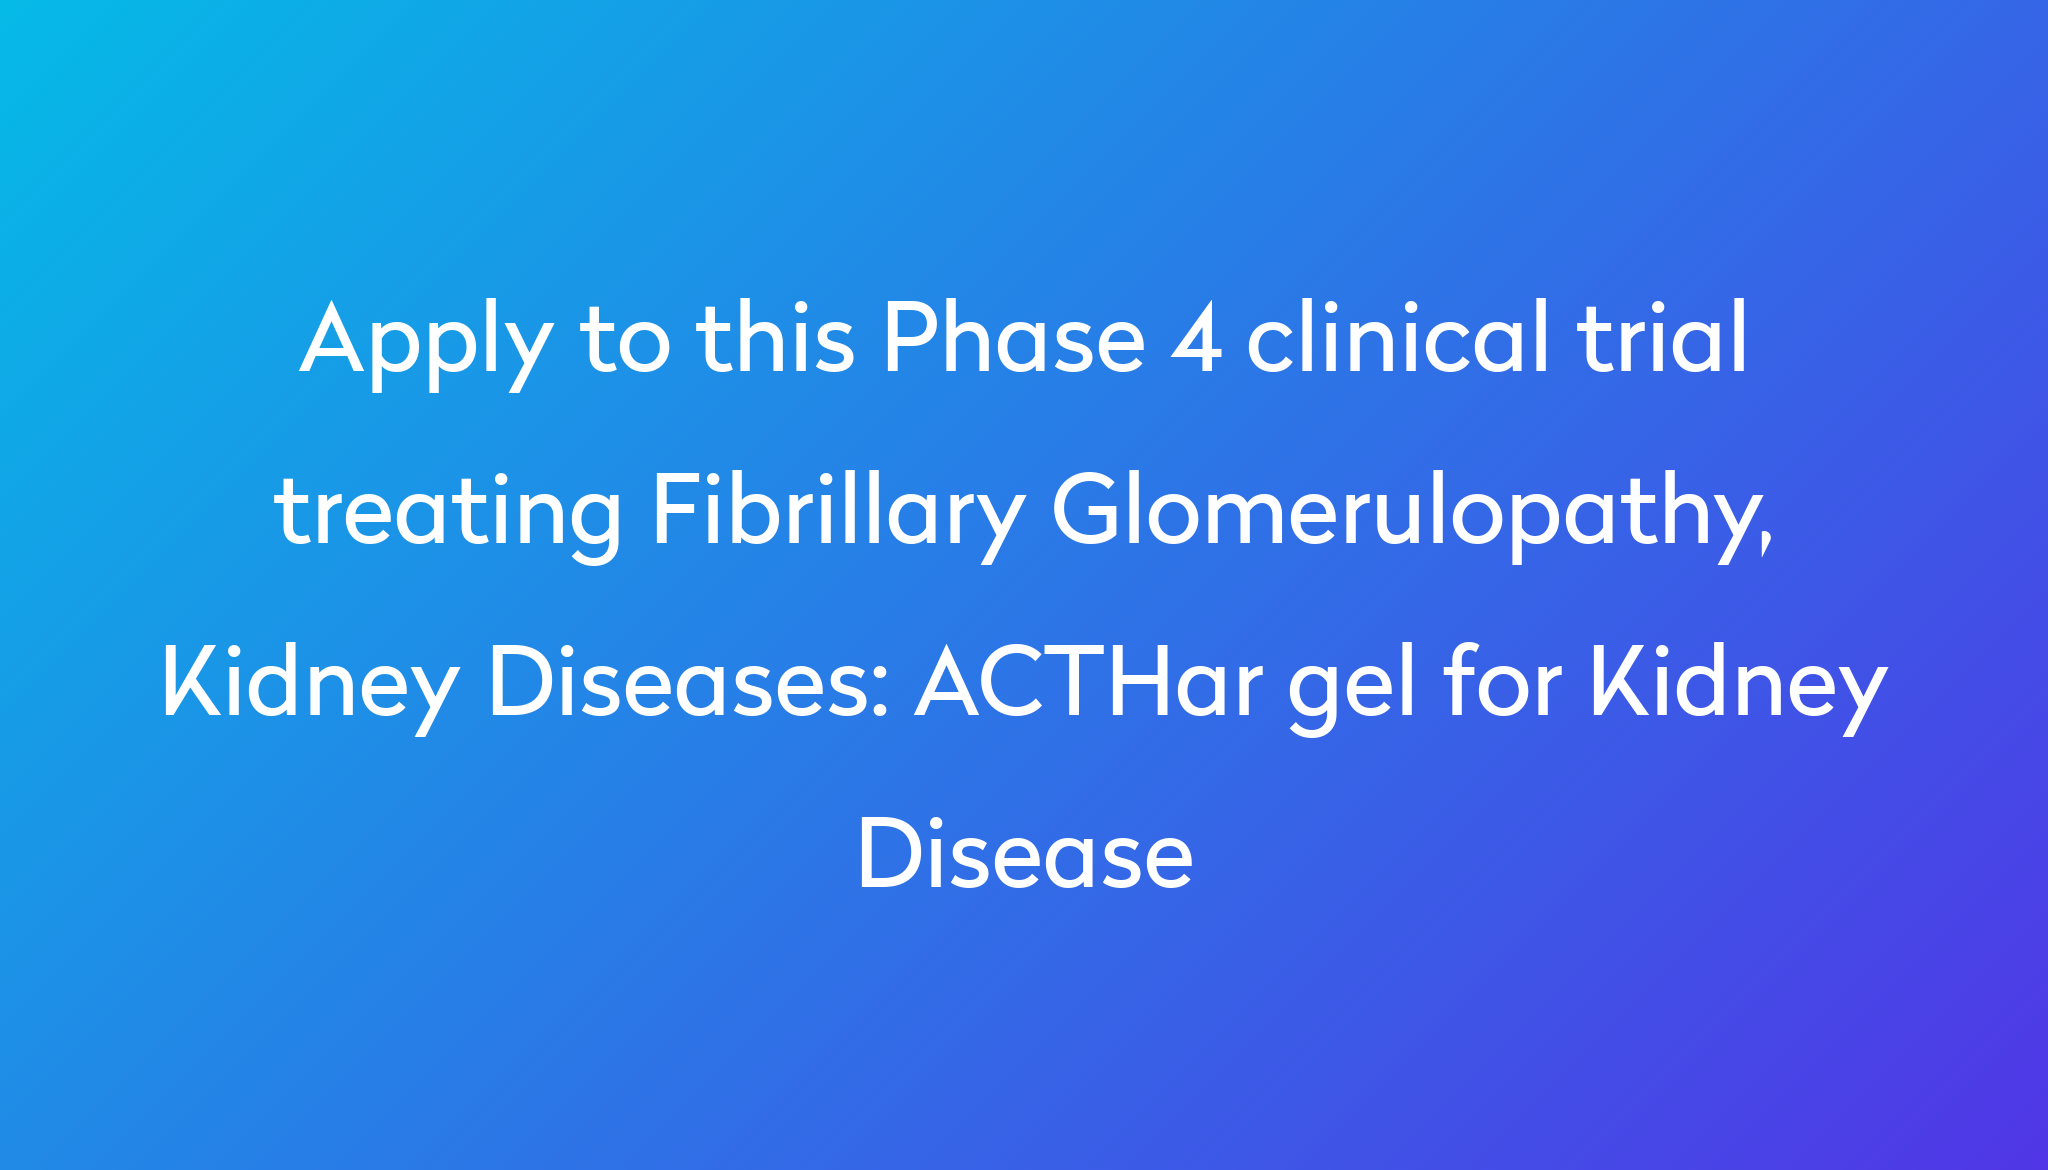 acthar-gel-for-kidney-disease-clinical-trial-2023-power